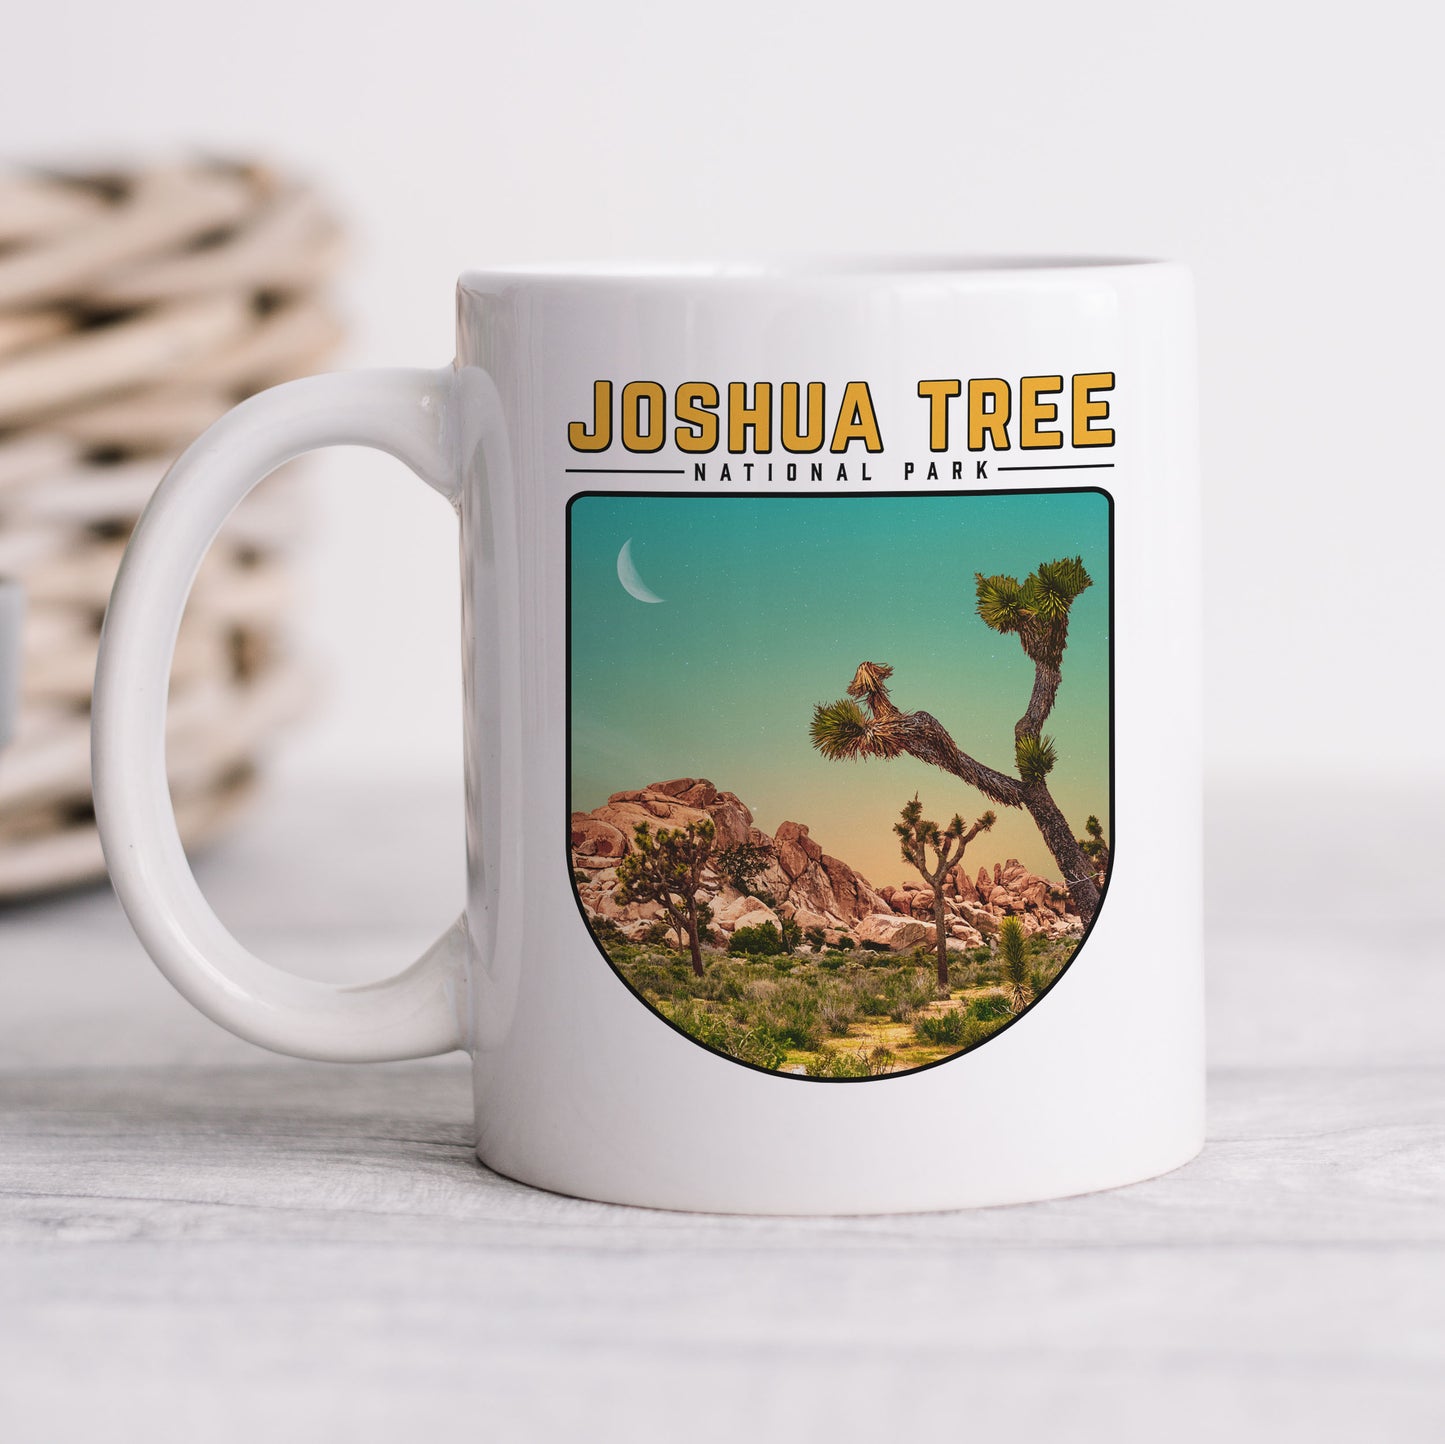 Joshua Tree National Park - Ceramic Mug